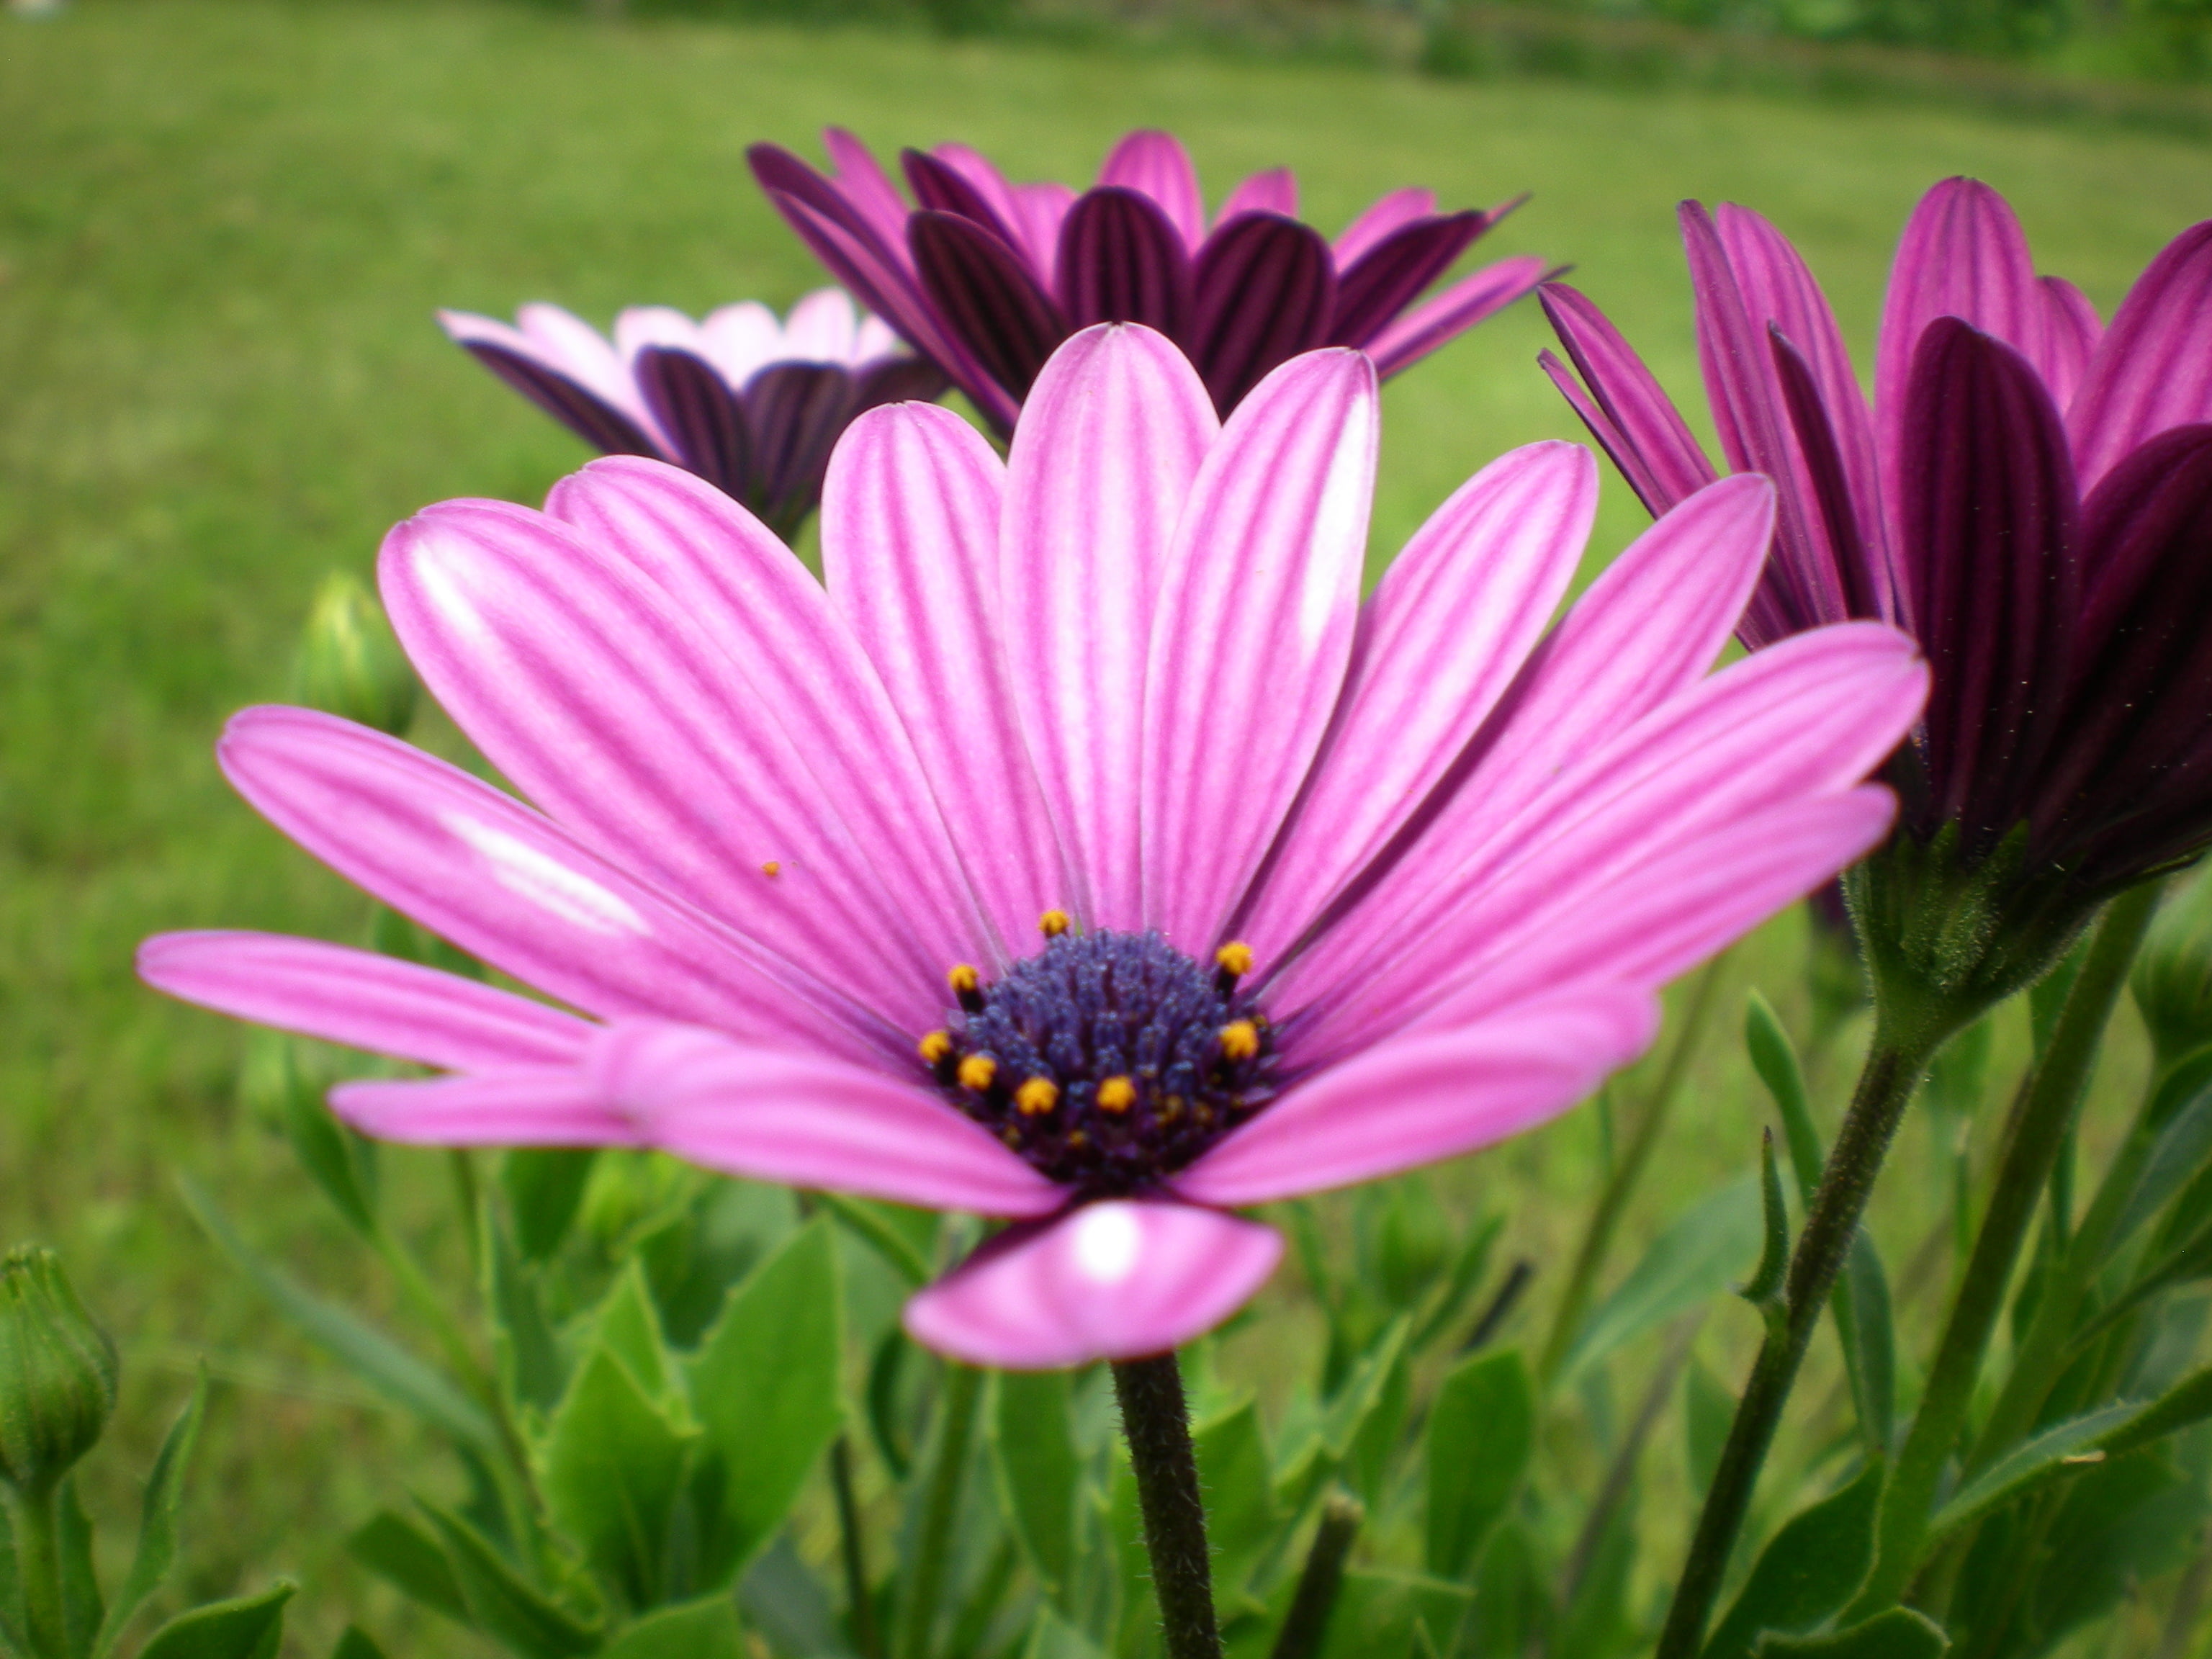 close up photo of purple daisy flower on green grass field, detail